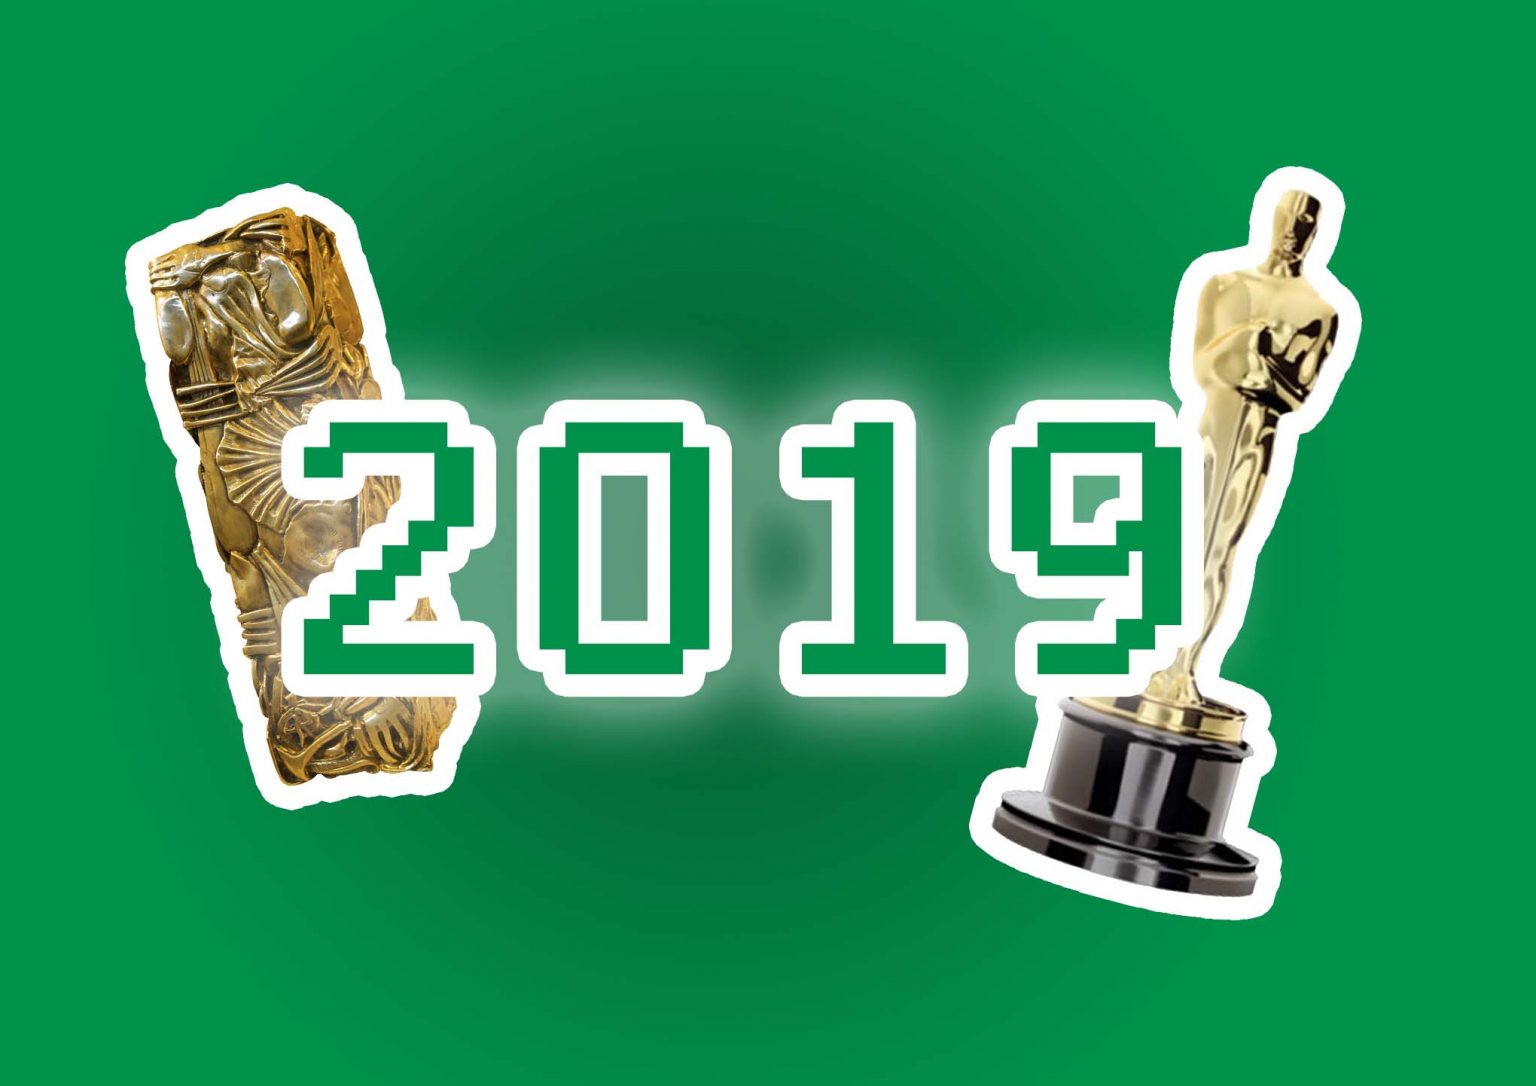 Oscars Cesar 2019 Poster.jpg